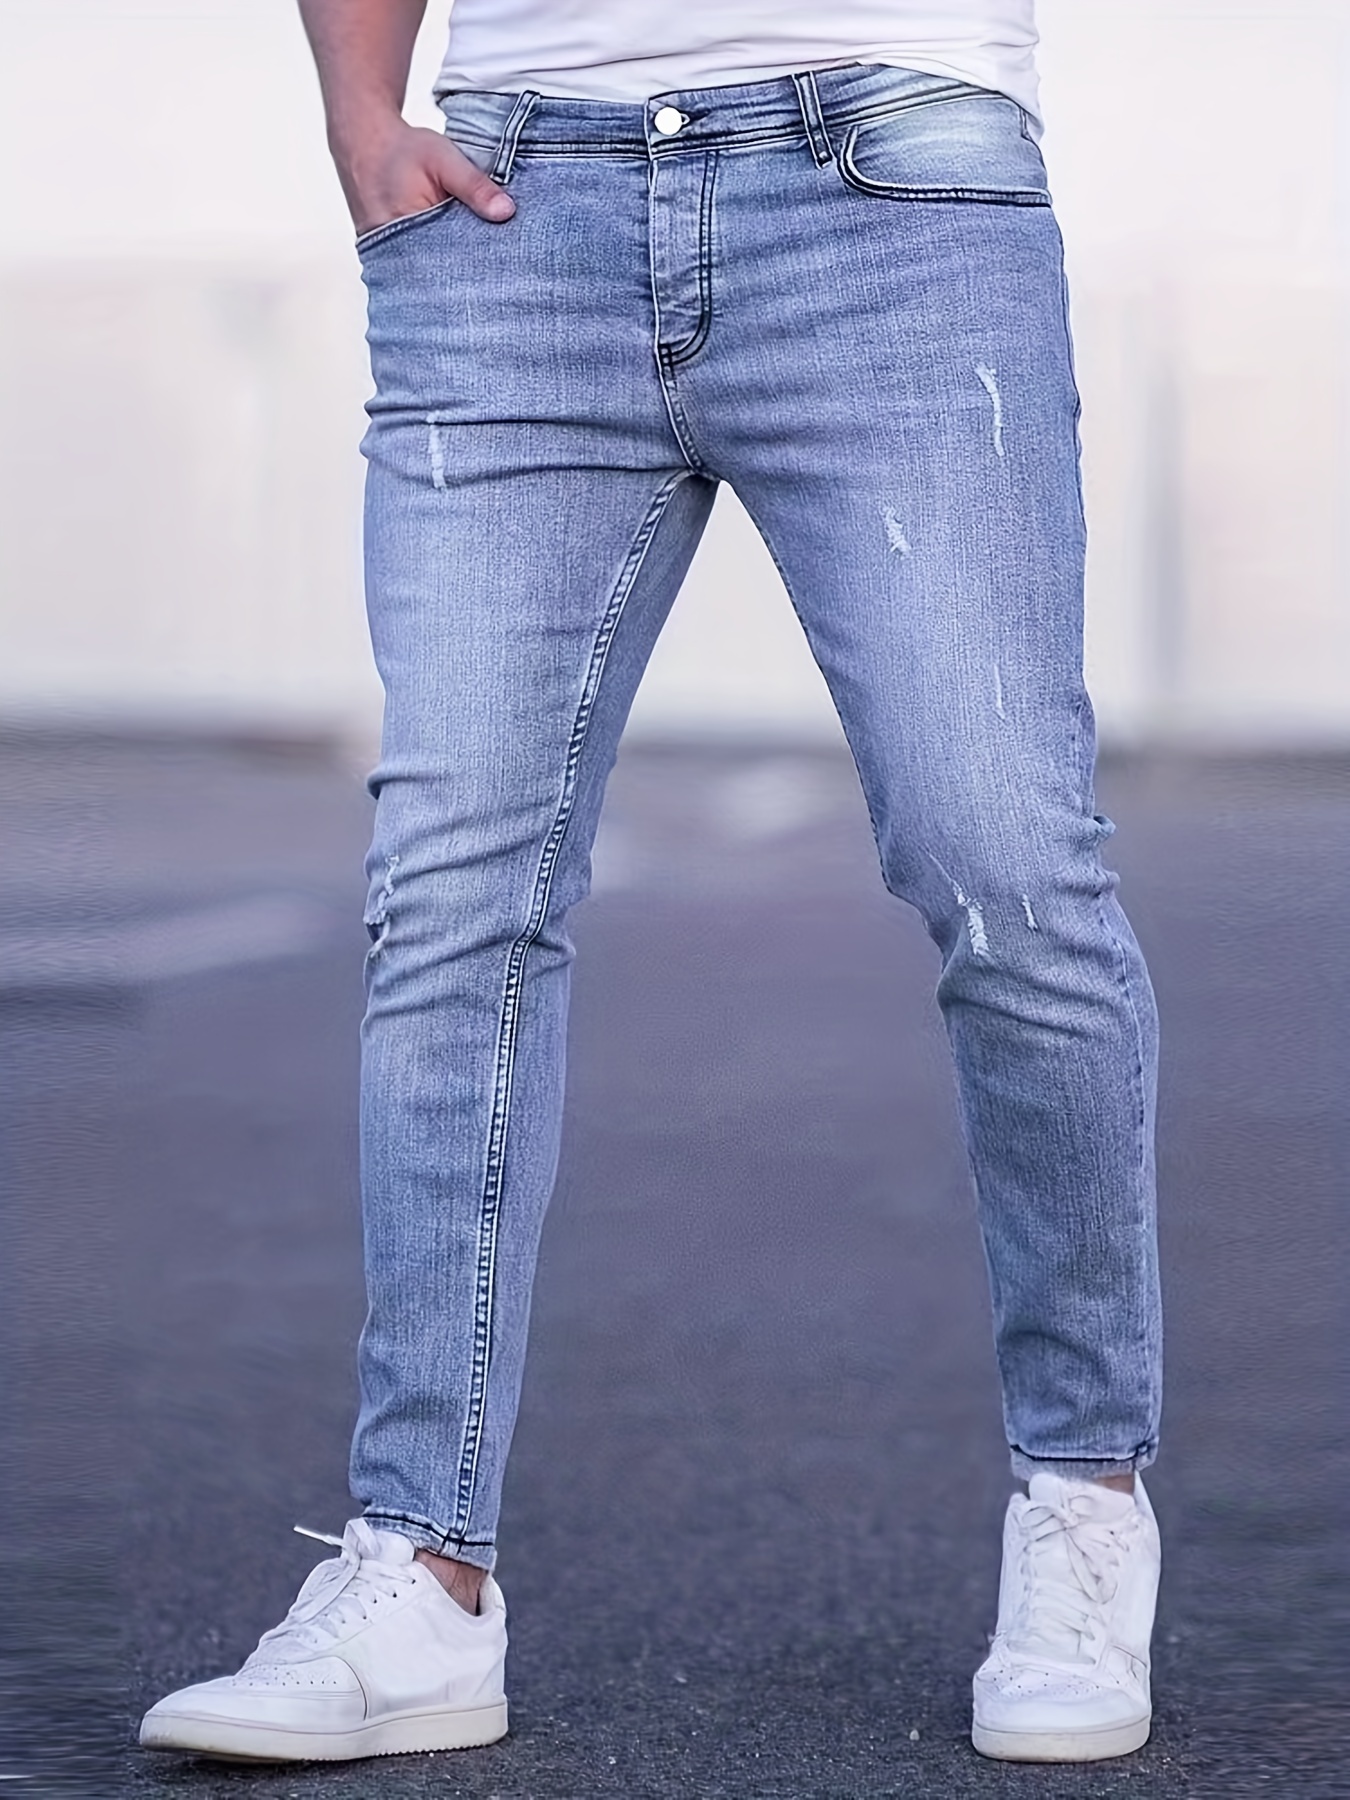 Jeans ajustados de cintura alta en azul, pantalones de mezclilla estilo  callejero ultra desgastados y de alta elasticidad, jeans de mezclilla y  ropa p